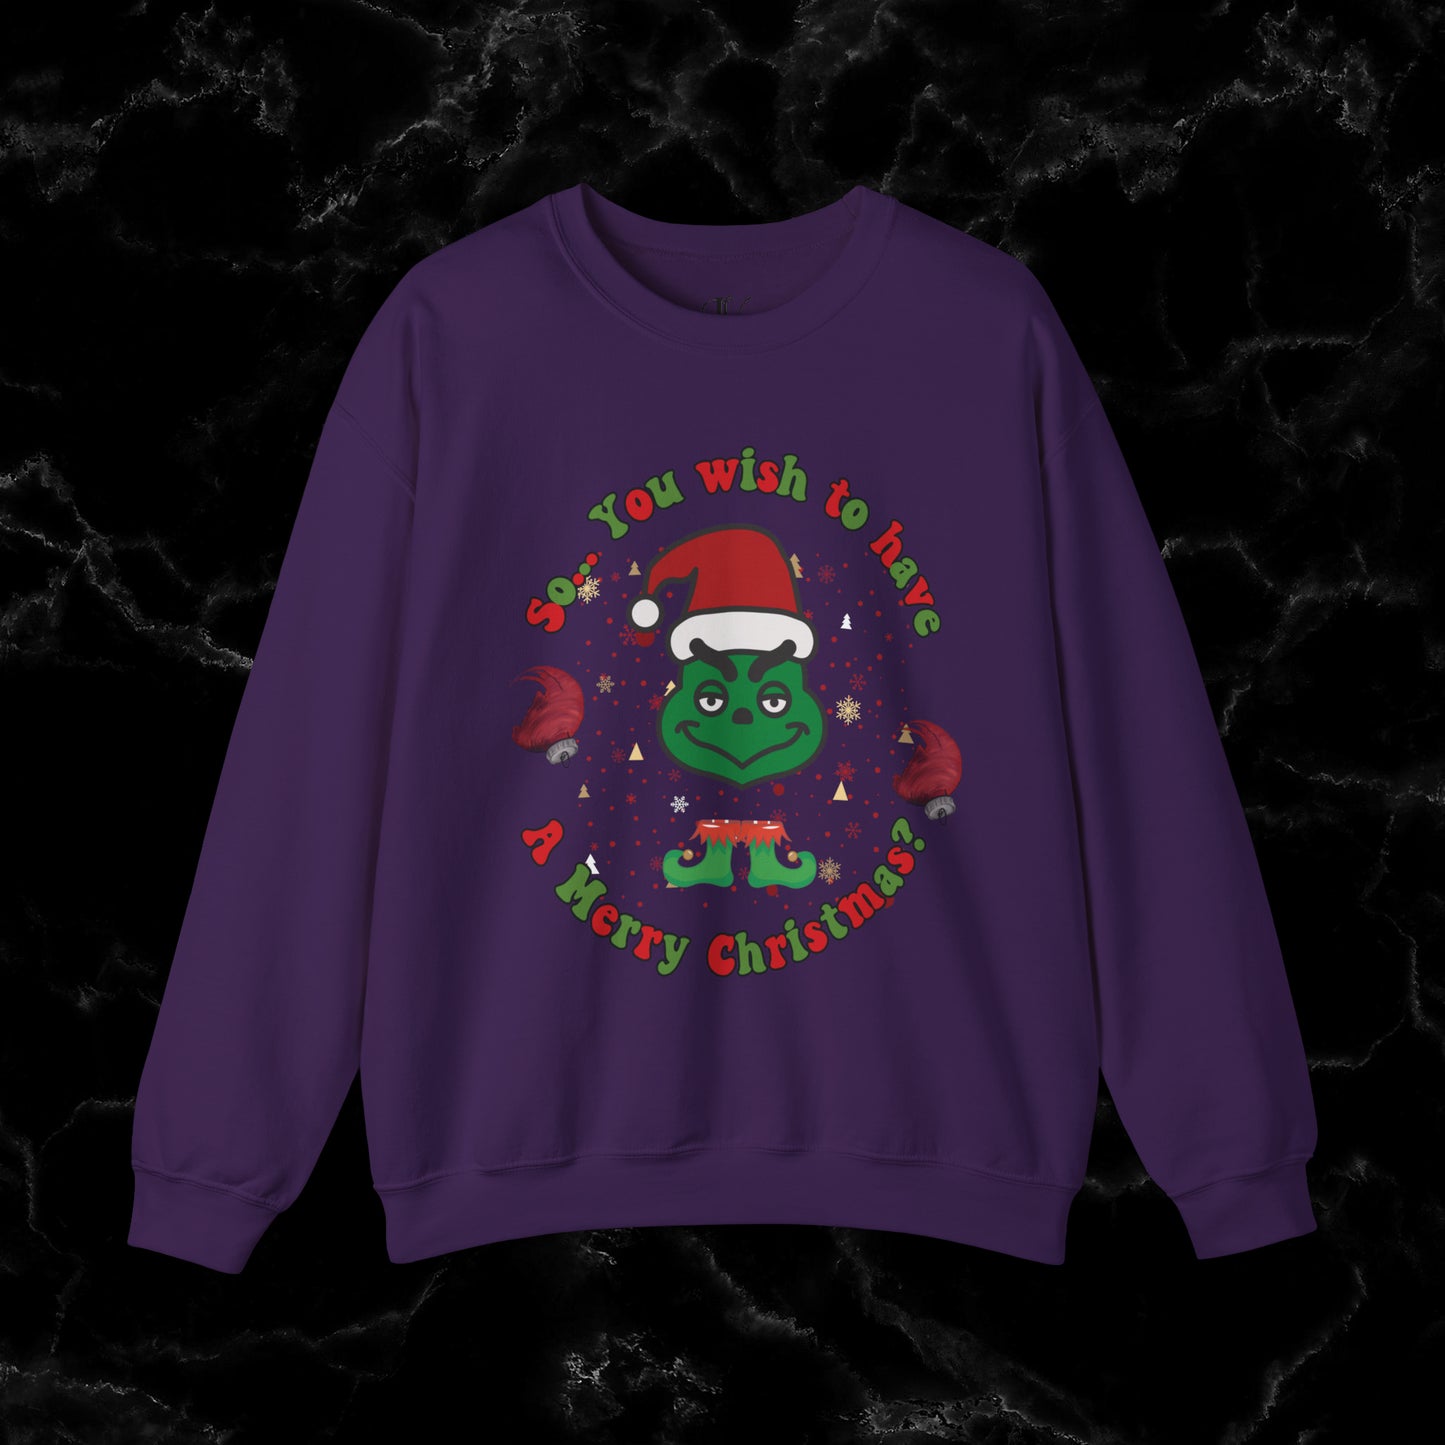 So You Wish To Have Merry Christmas Grinch Sweatshirt - Funny Grinchmas Gift Sweatshirt S Purple 